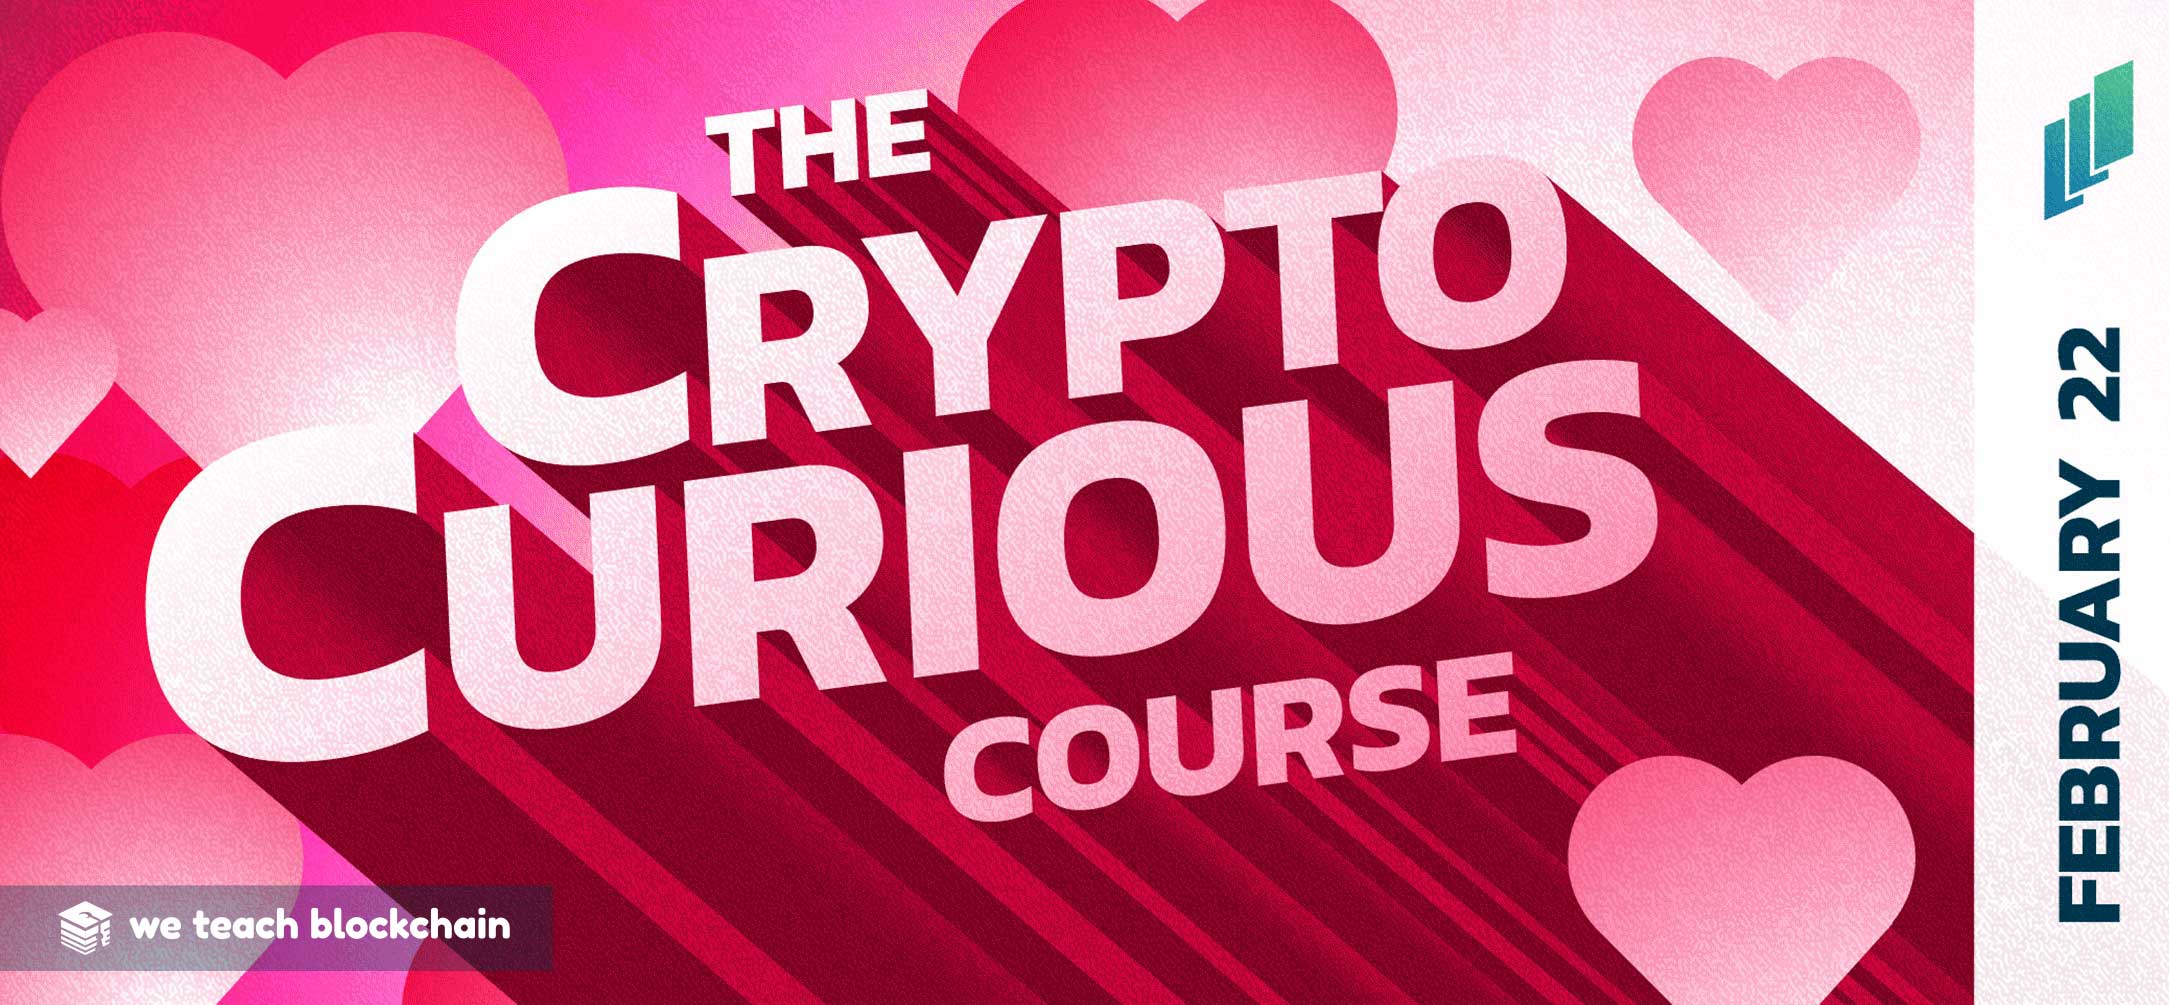 The Crypto Curious Course